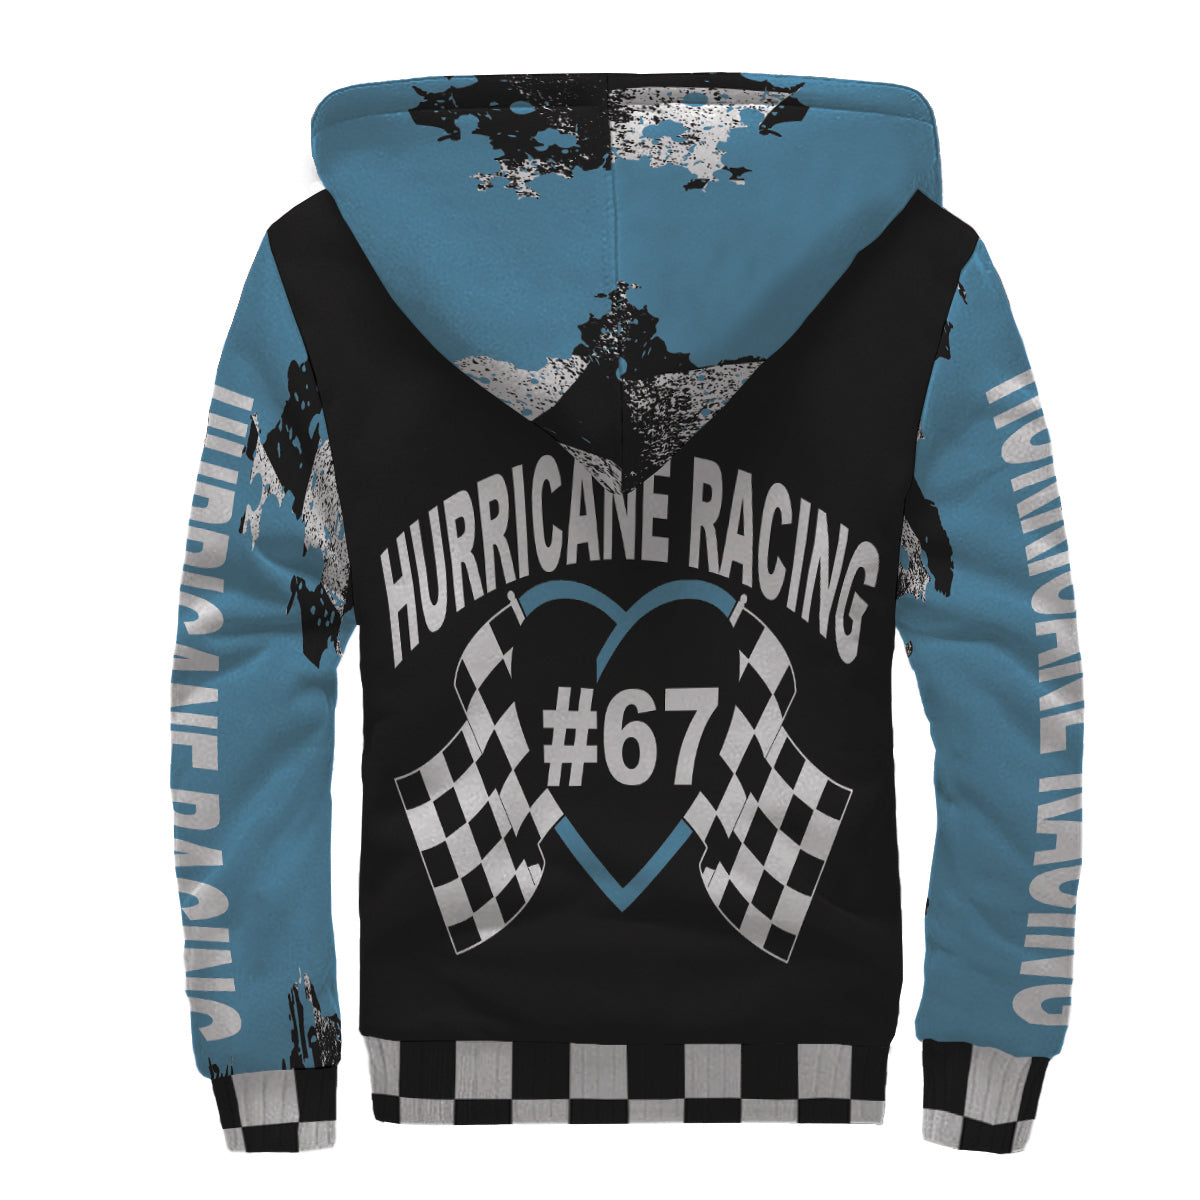 Hurricane Racing #67 Sherpa Jacket